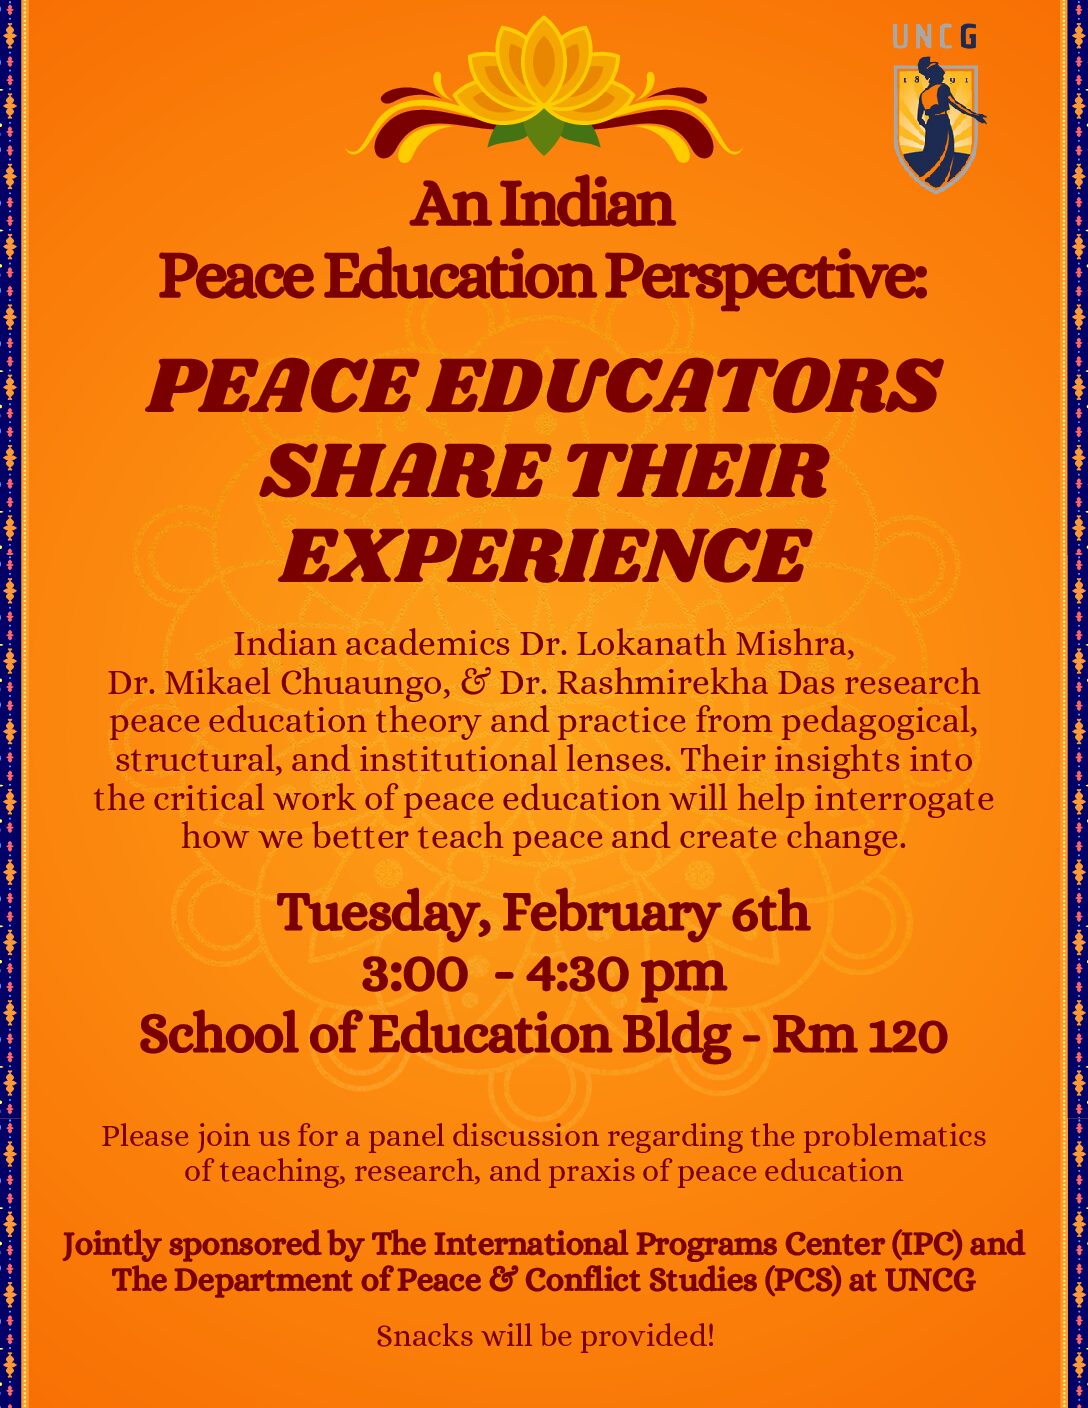 Indian Peace Educators Visit – February 6th